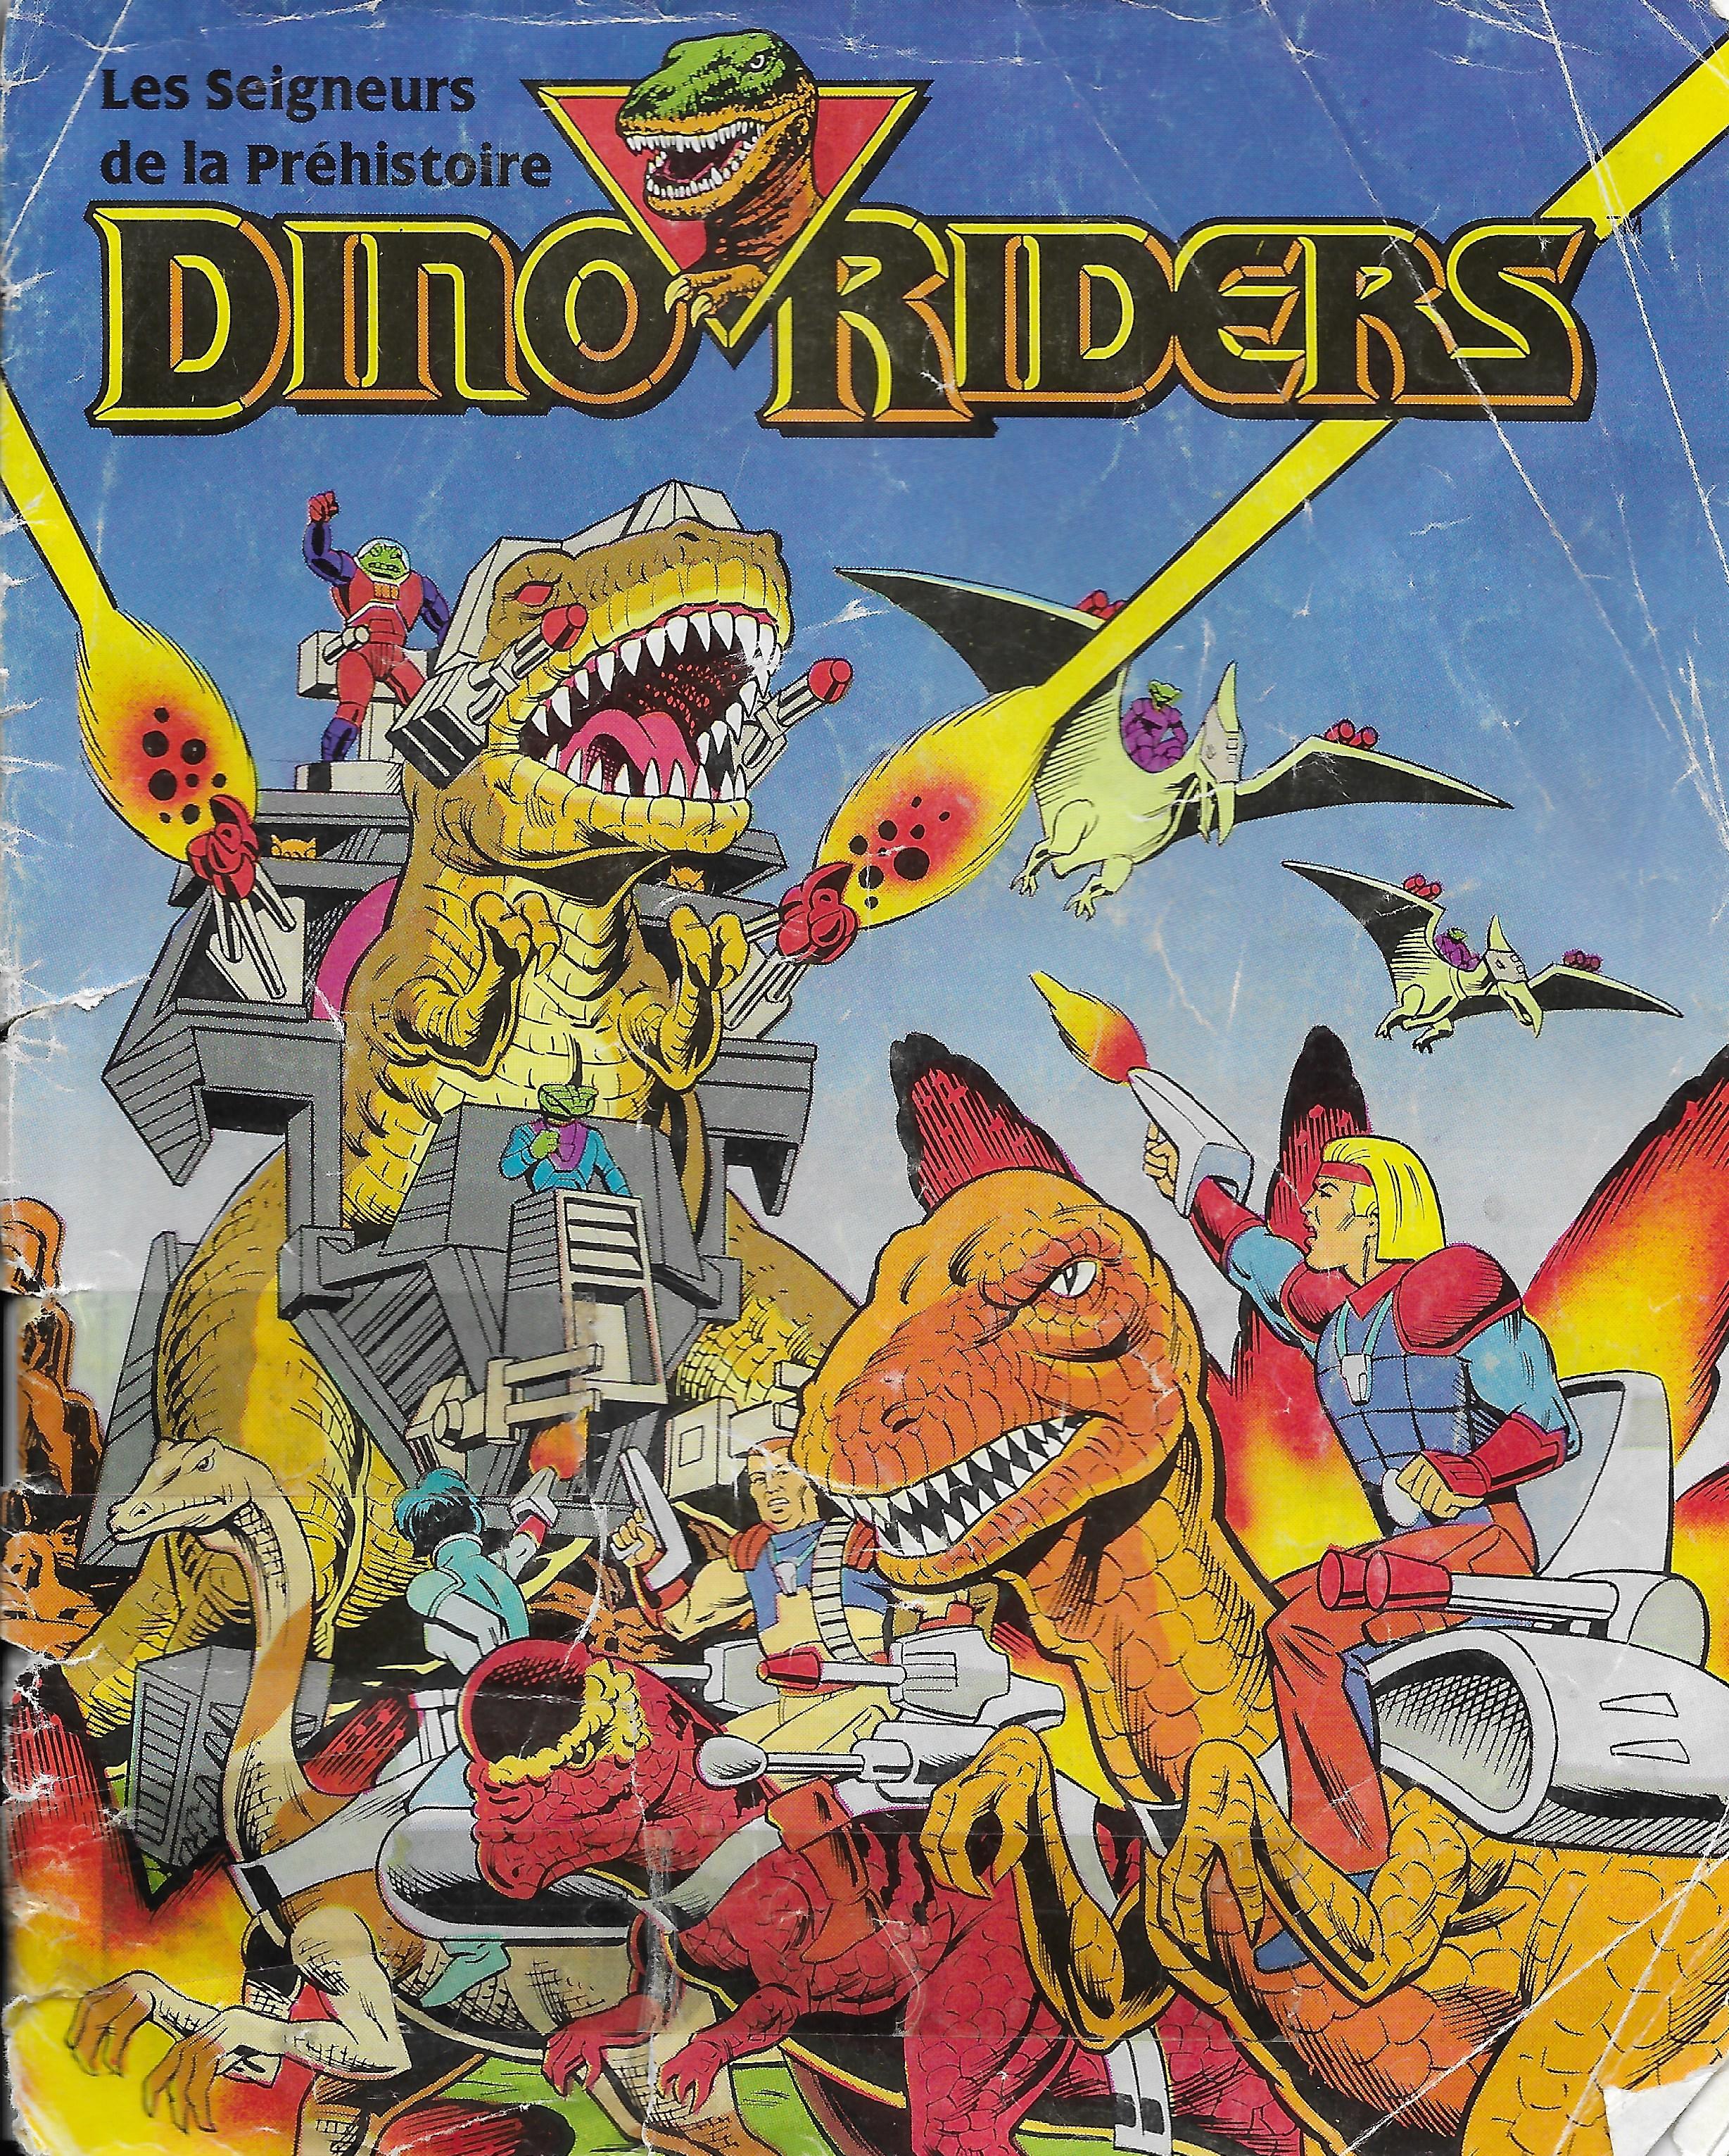 1989-es francia Dino Riders képregény/katalógus